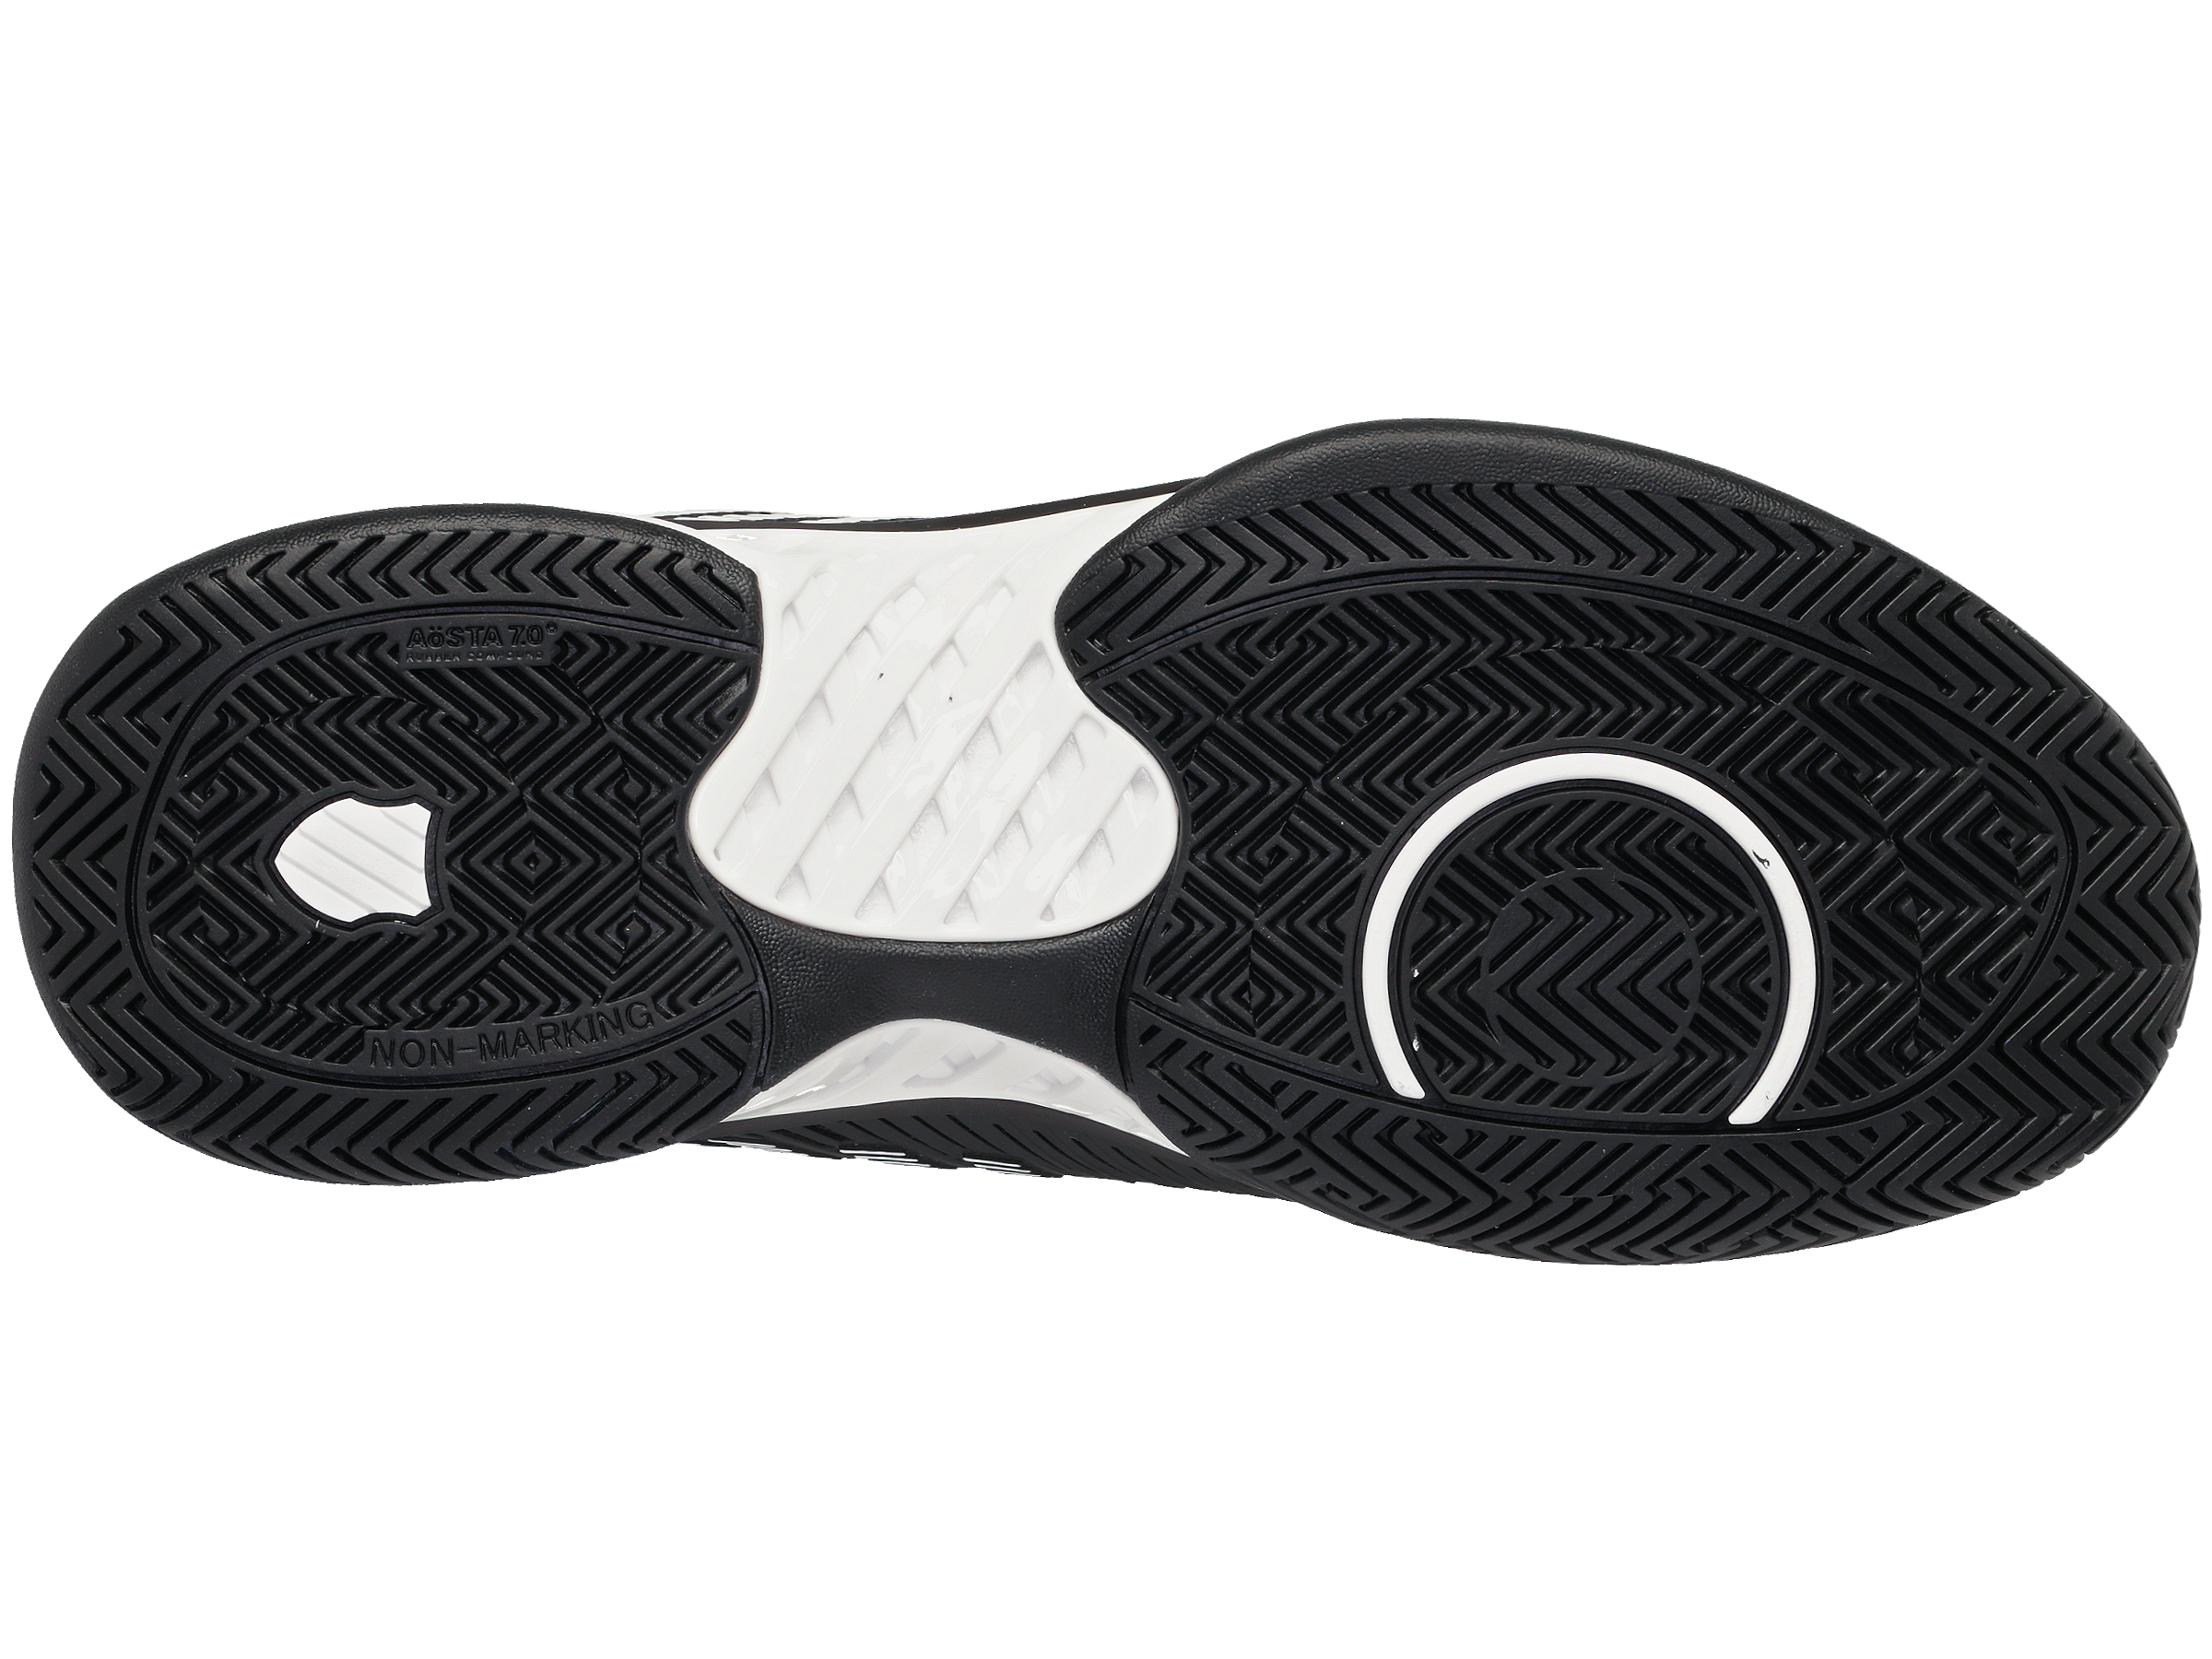 K-Swiss Men's Hypercourt Express 2 Tennis Shoes in Black/White